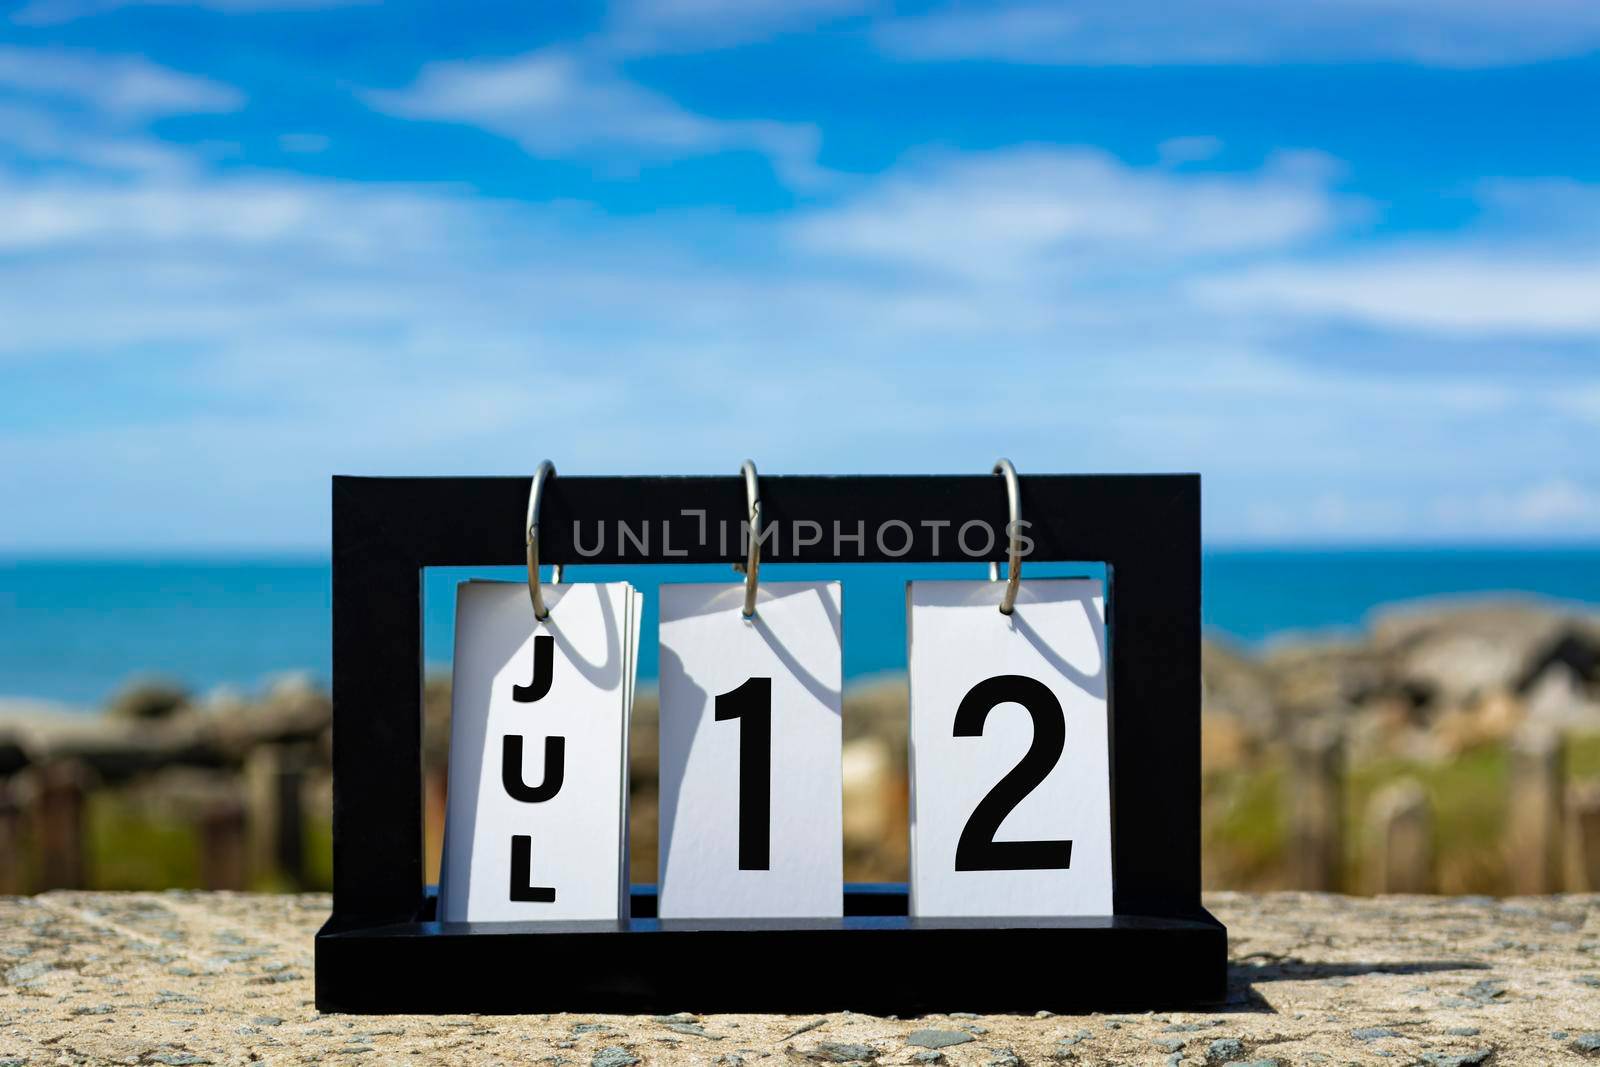 Jul 12 calendar date text on wooden frame with blurred background of ocean. Calendar date concept.